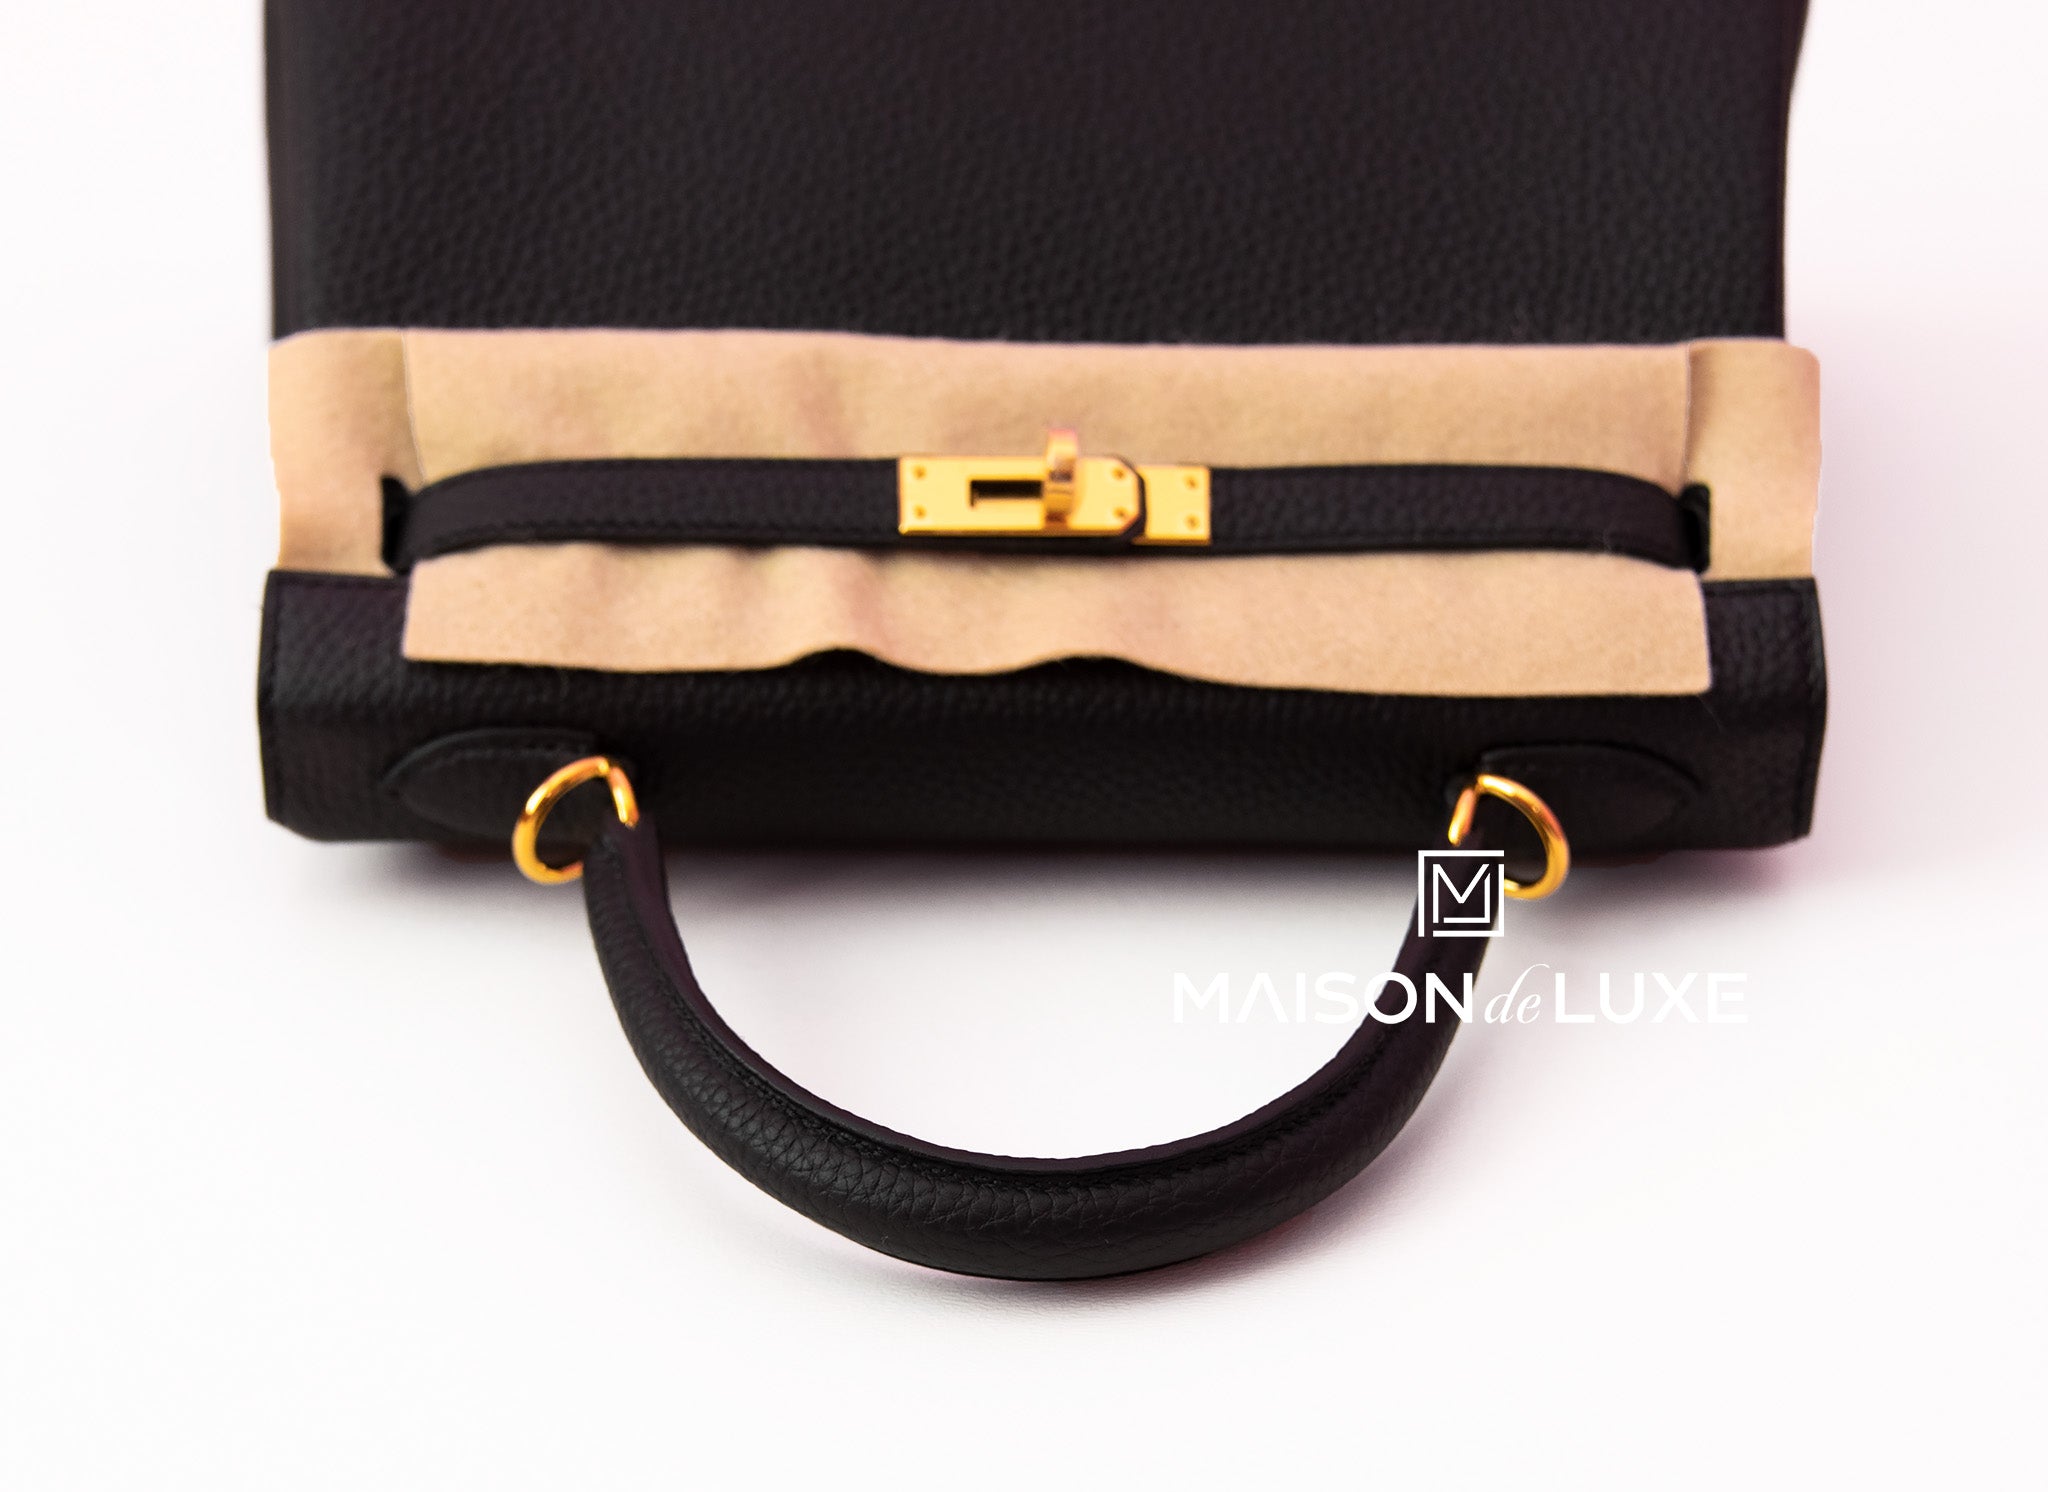 Kelly 25 leather handbag Hermès Black in Leather - 34363385